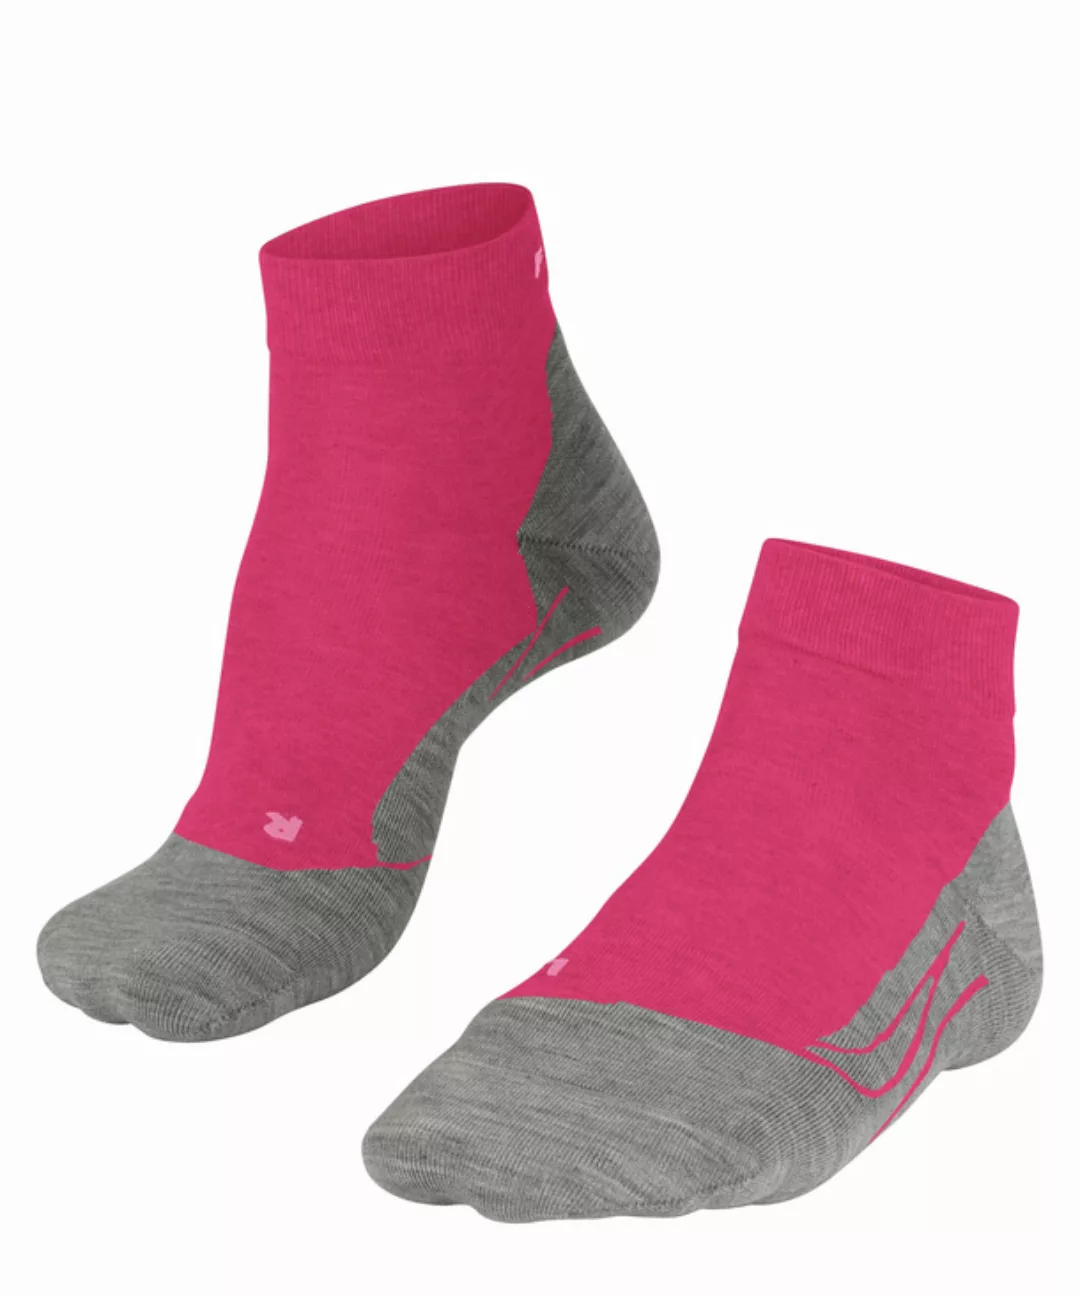 FALKE GO2 Short Damen Golf Socken, 37-38, Rot, Baumwolle, 16780-856402 günstig online kaufen